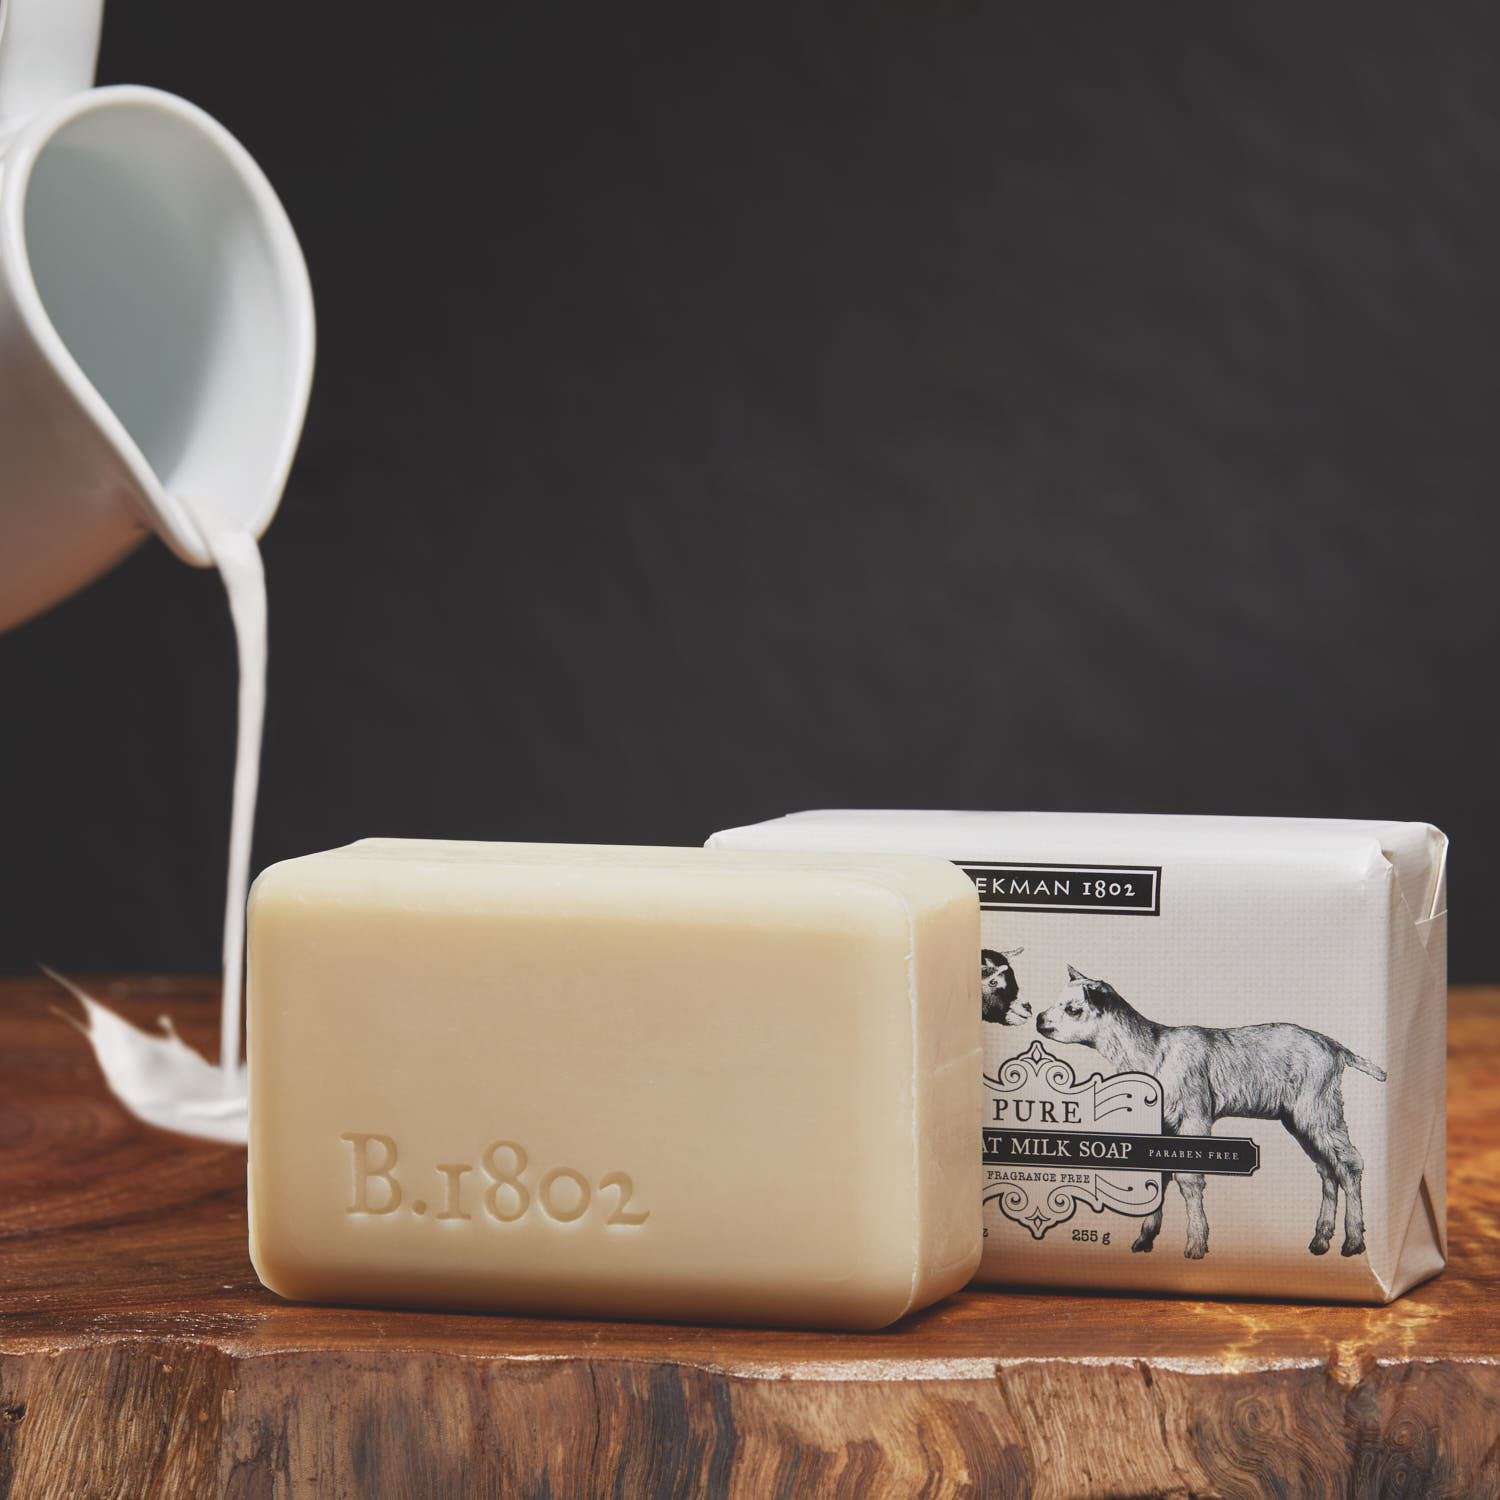 Beekman 1802 Original Goat Milk Soap - Reviews